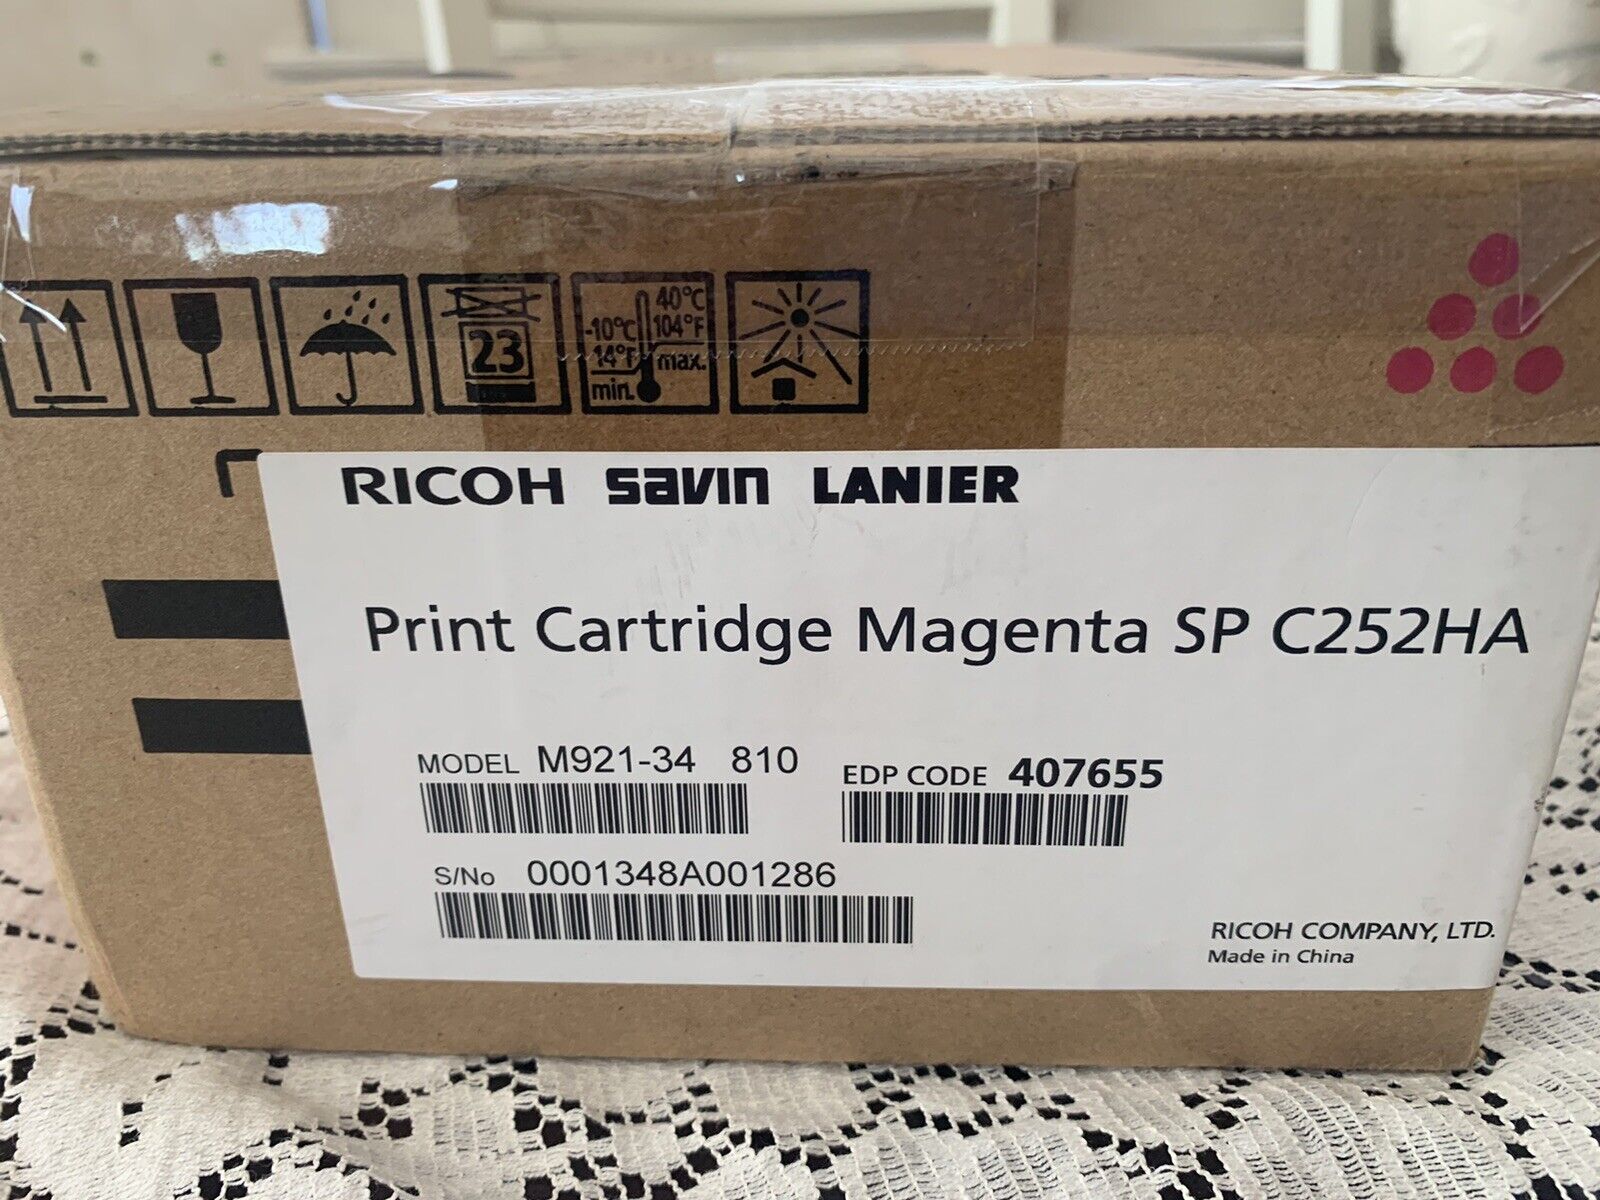 Ricoh SP C252HA Magenta Genuine OEM Original Toner Cartridge Never use. Open box